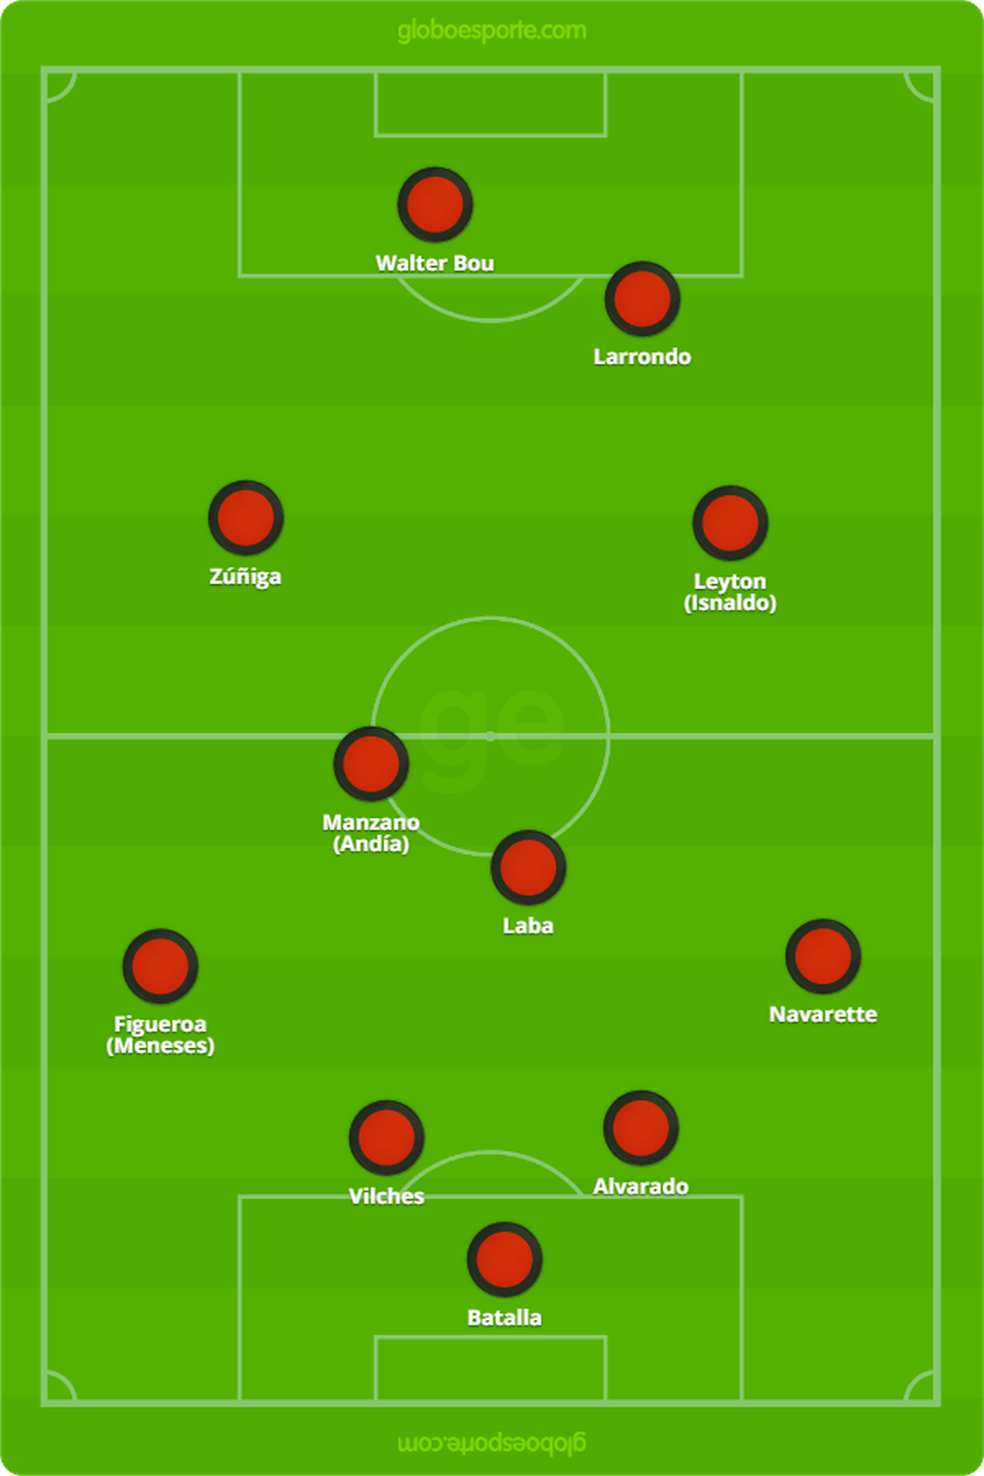 Union La Calera - Flamengo vs Unión La Calera: Predictions, odds and how to ...